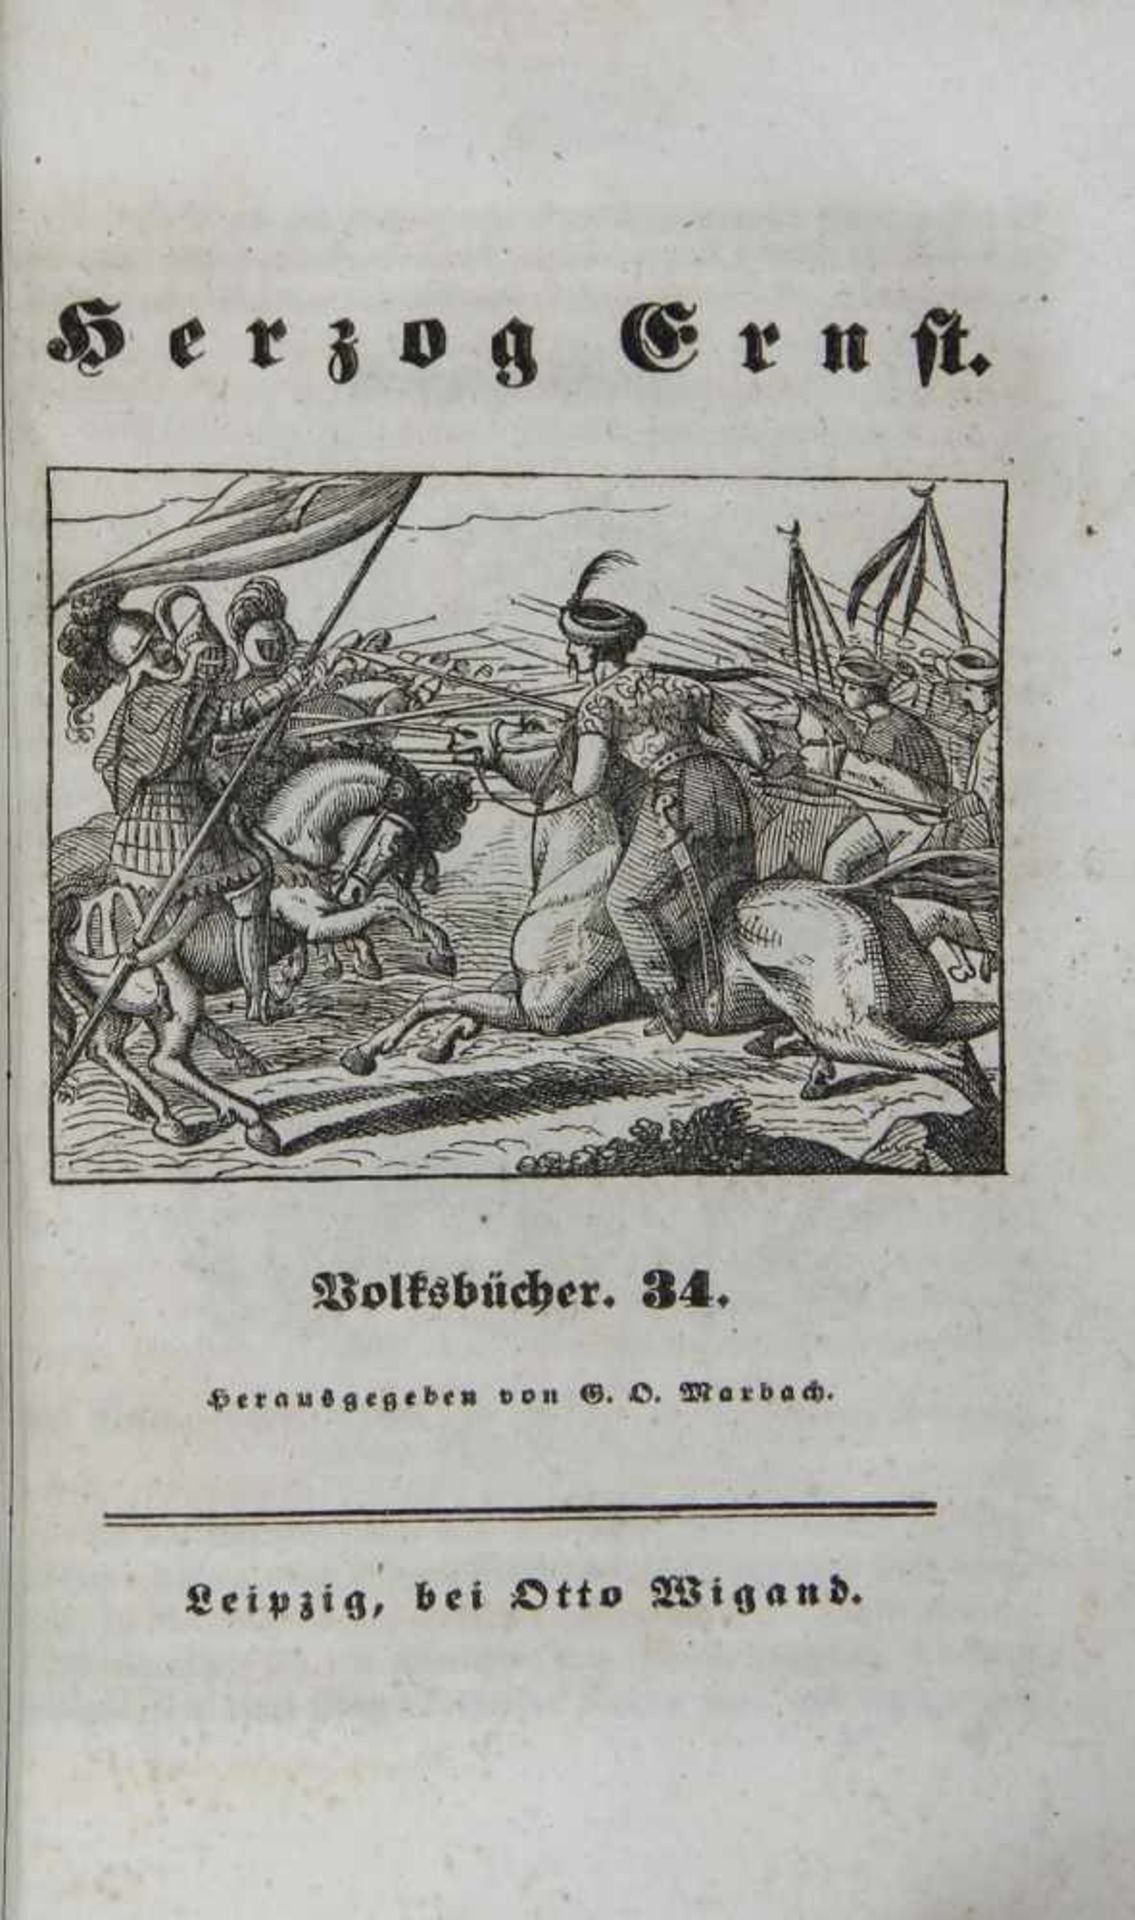 Marbach, G. O.: "Volksbücher" - Image 6 of 6